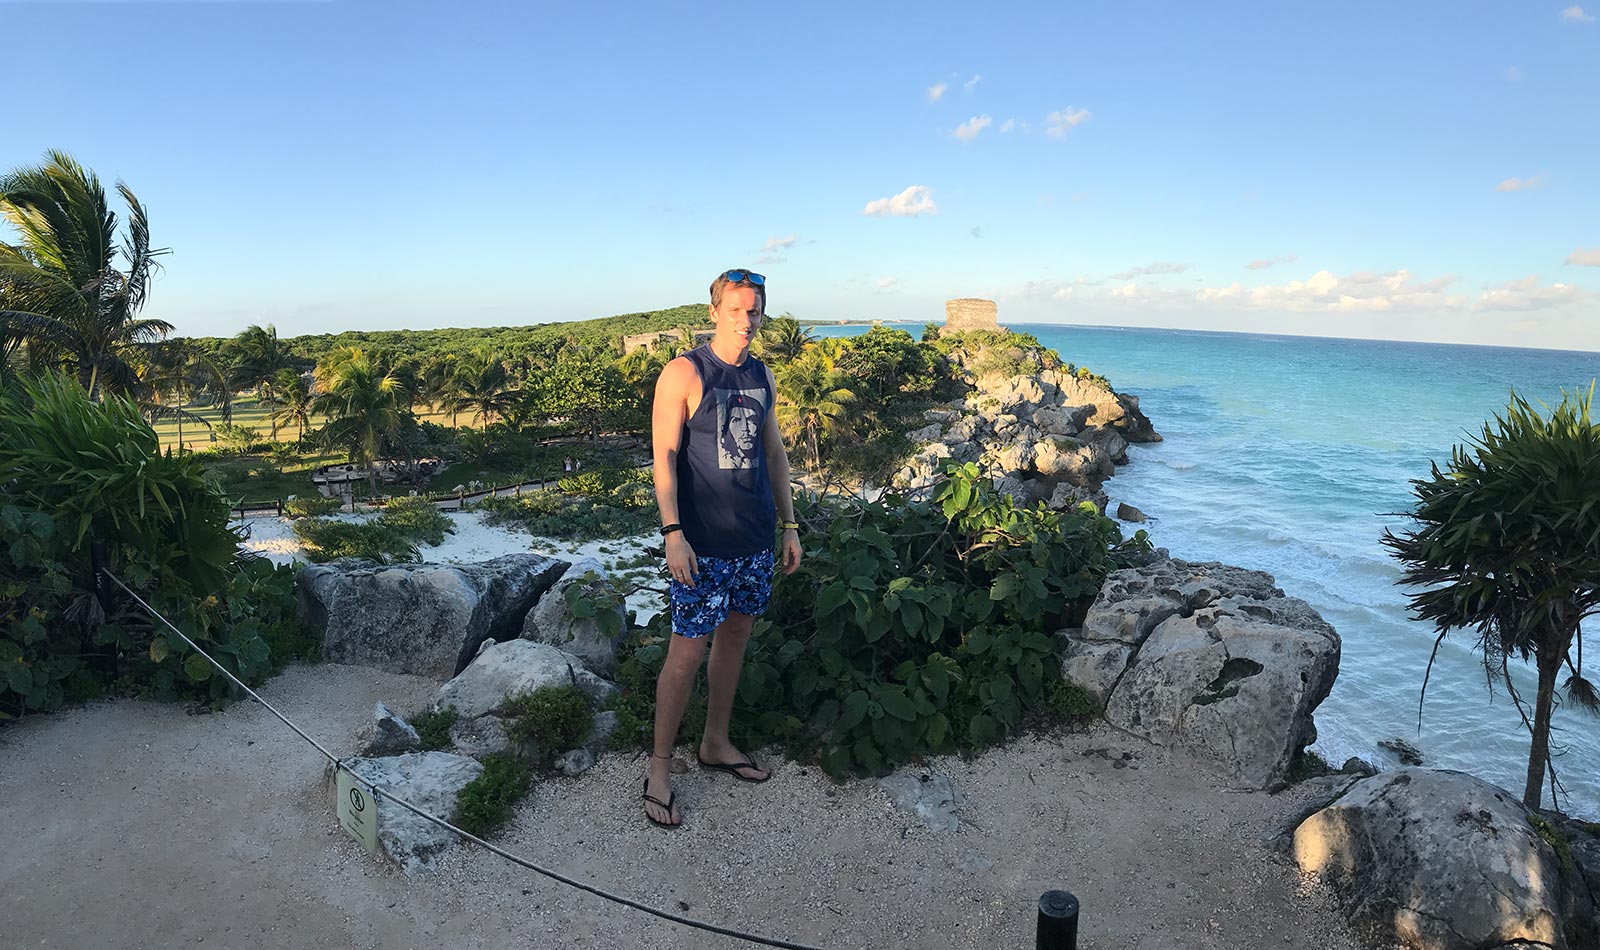 David Simpson at viewpoint in Cancun, Mexico. Chichén Itzá and the Yucatán coast